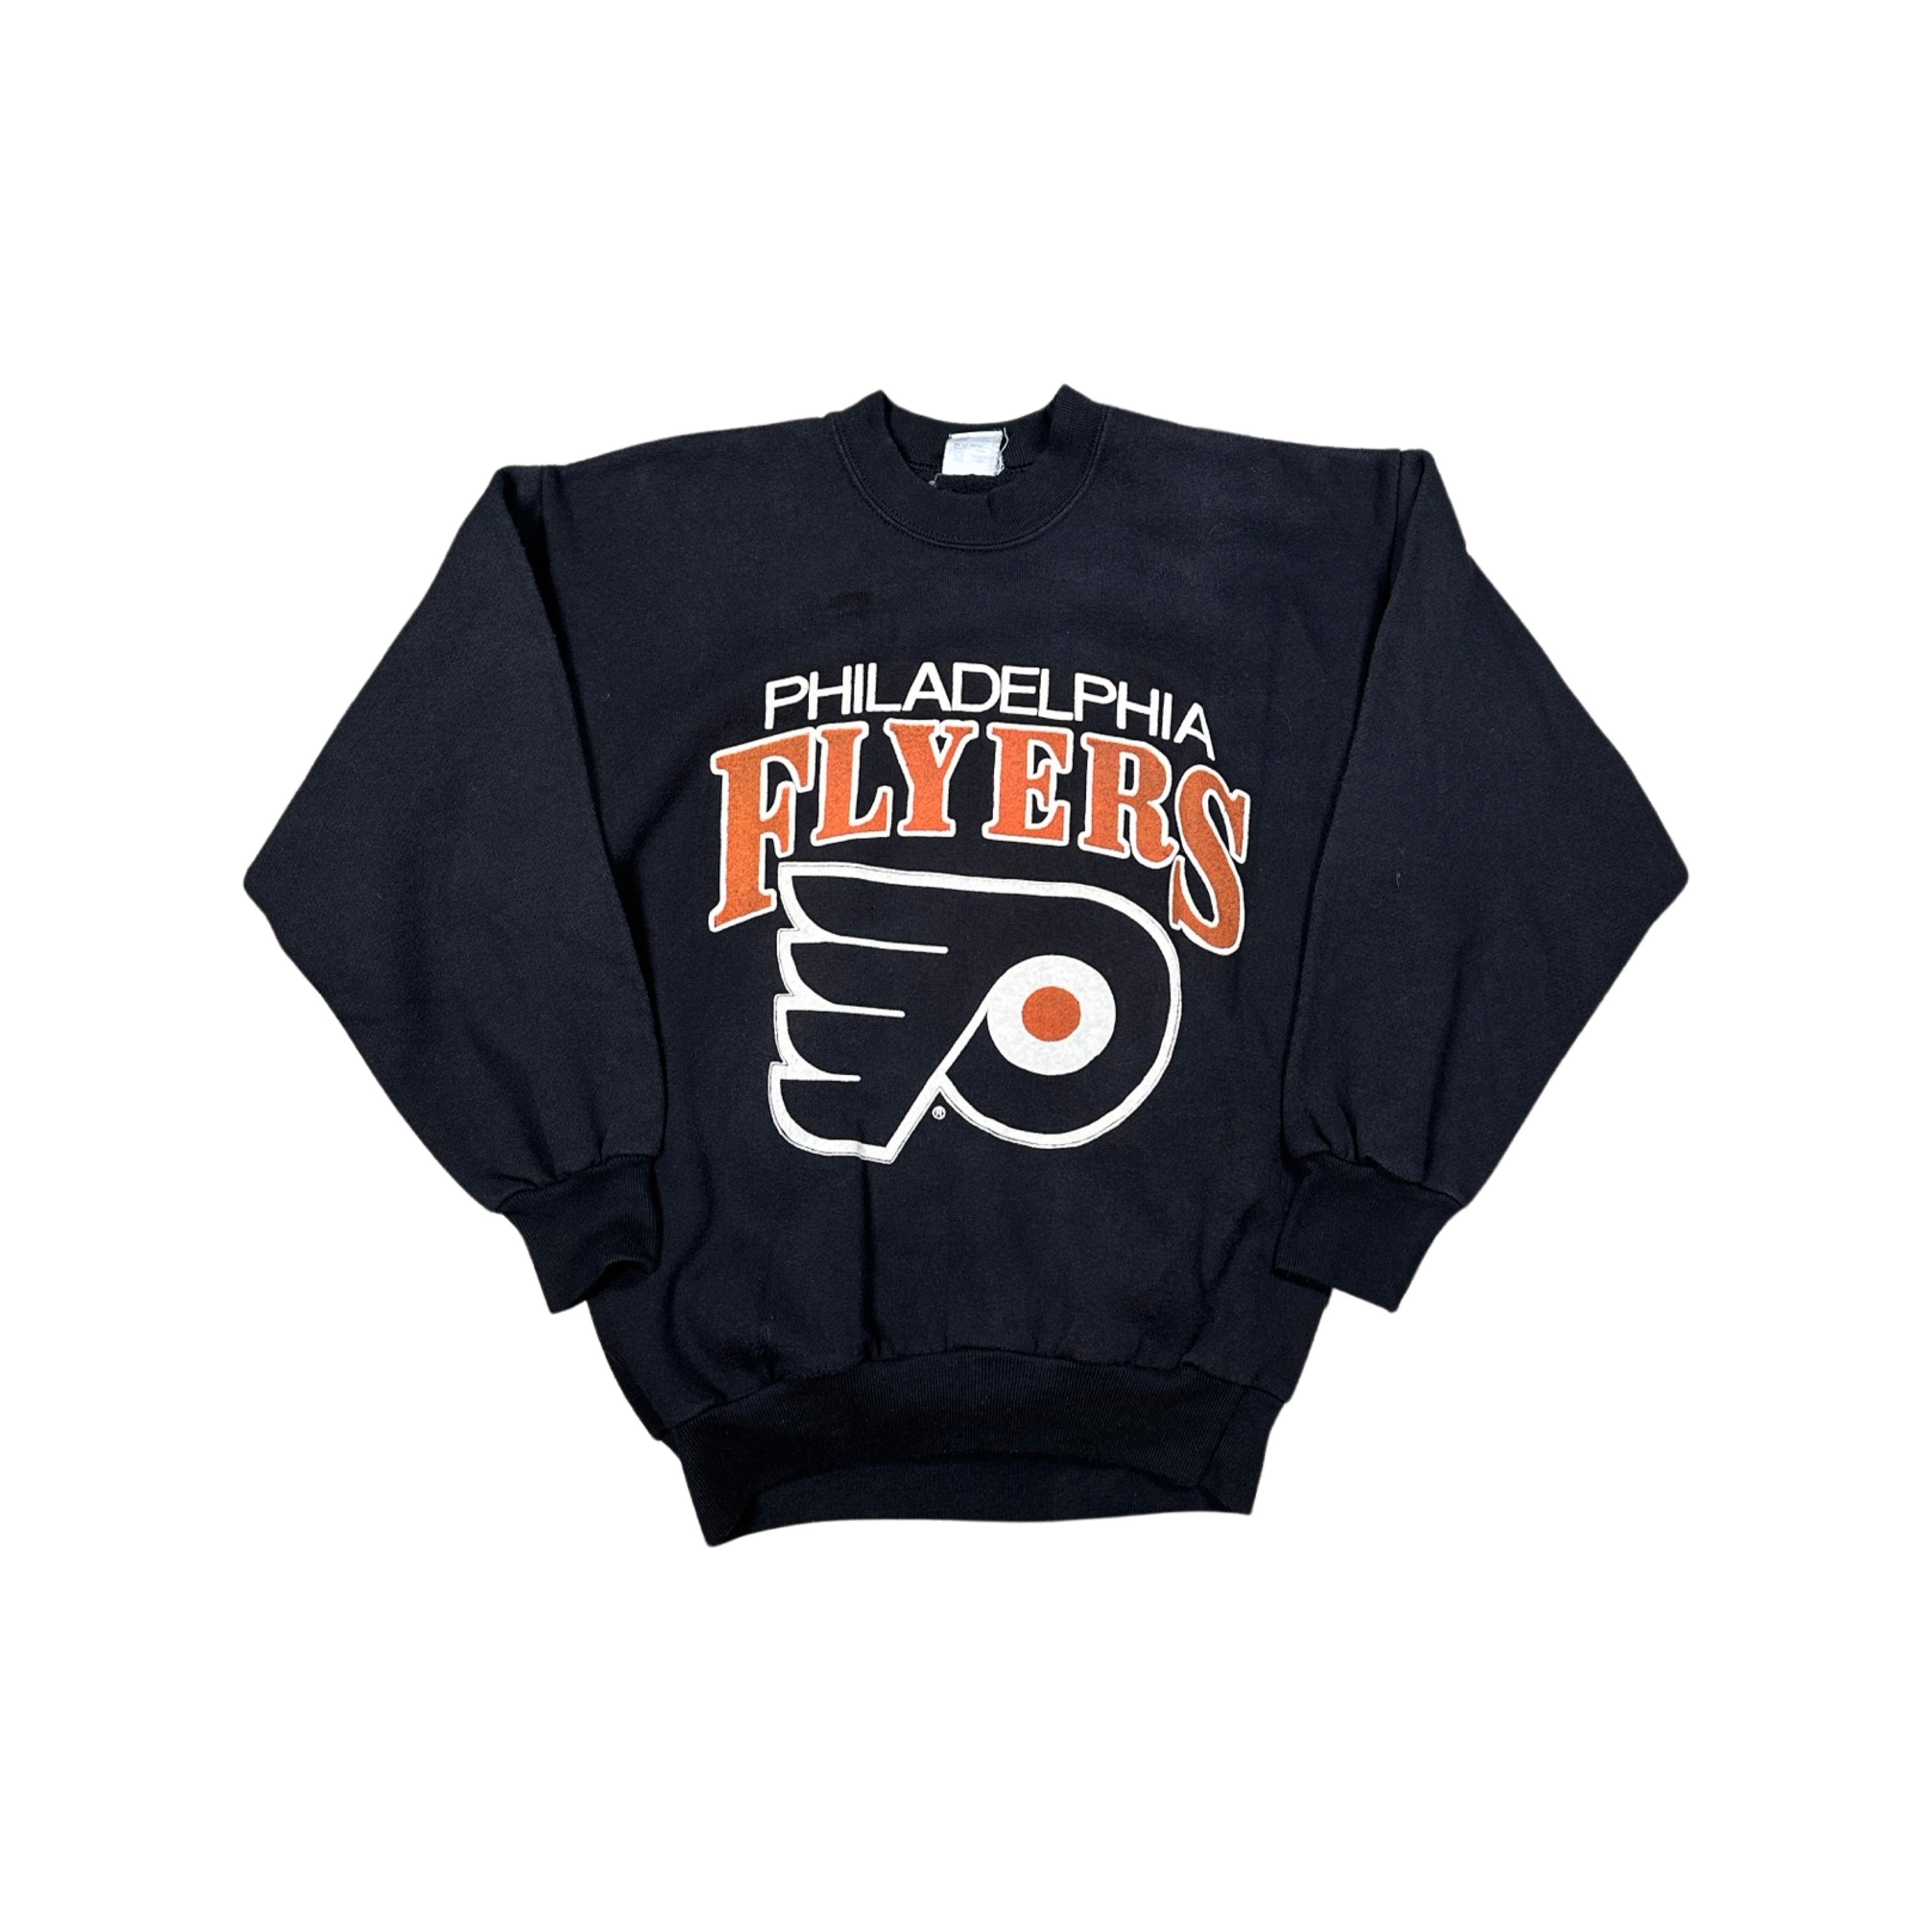 Philadelphia Flyers 80s Sweater (Small)